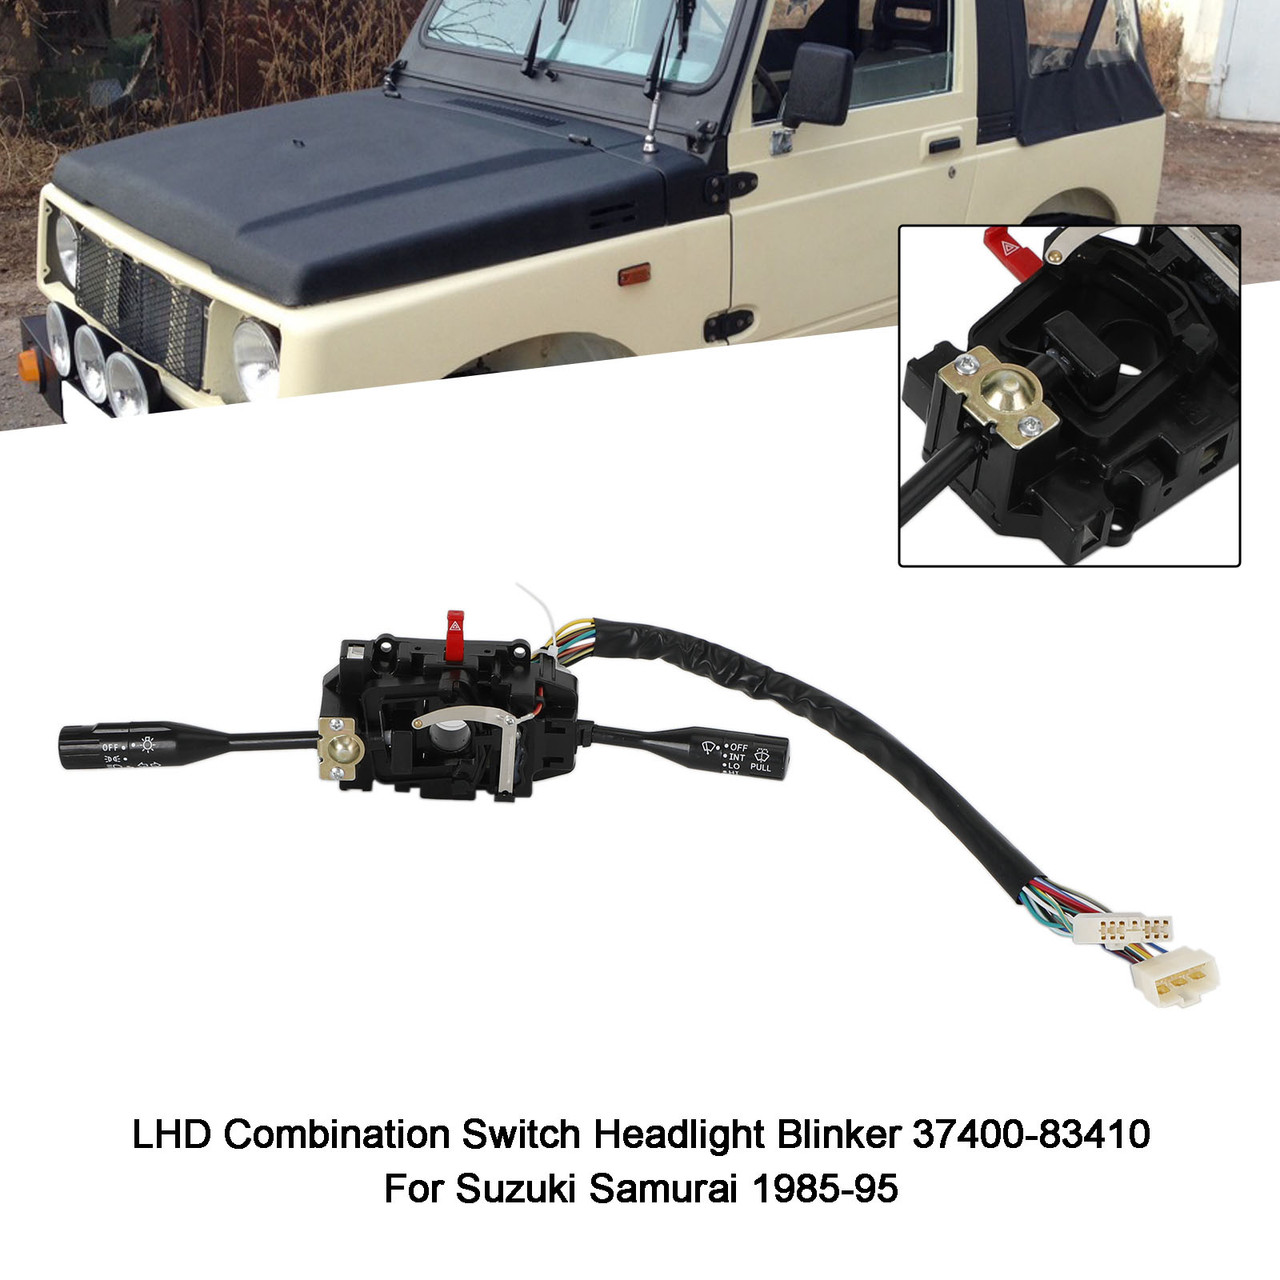 LHD Combination Switch Headlight Blinker 37400-83410 Suzuki Samurai 1985-95